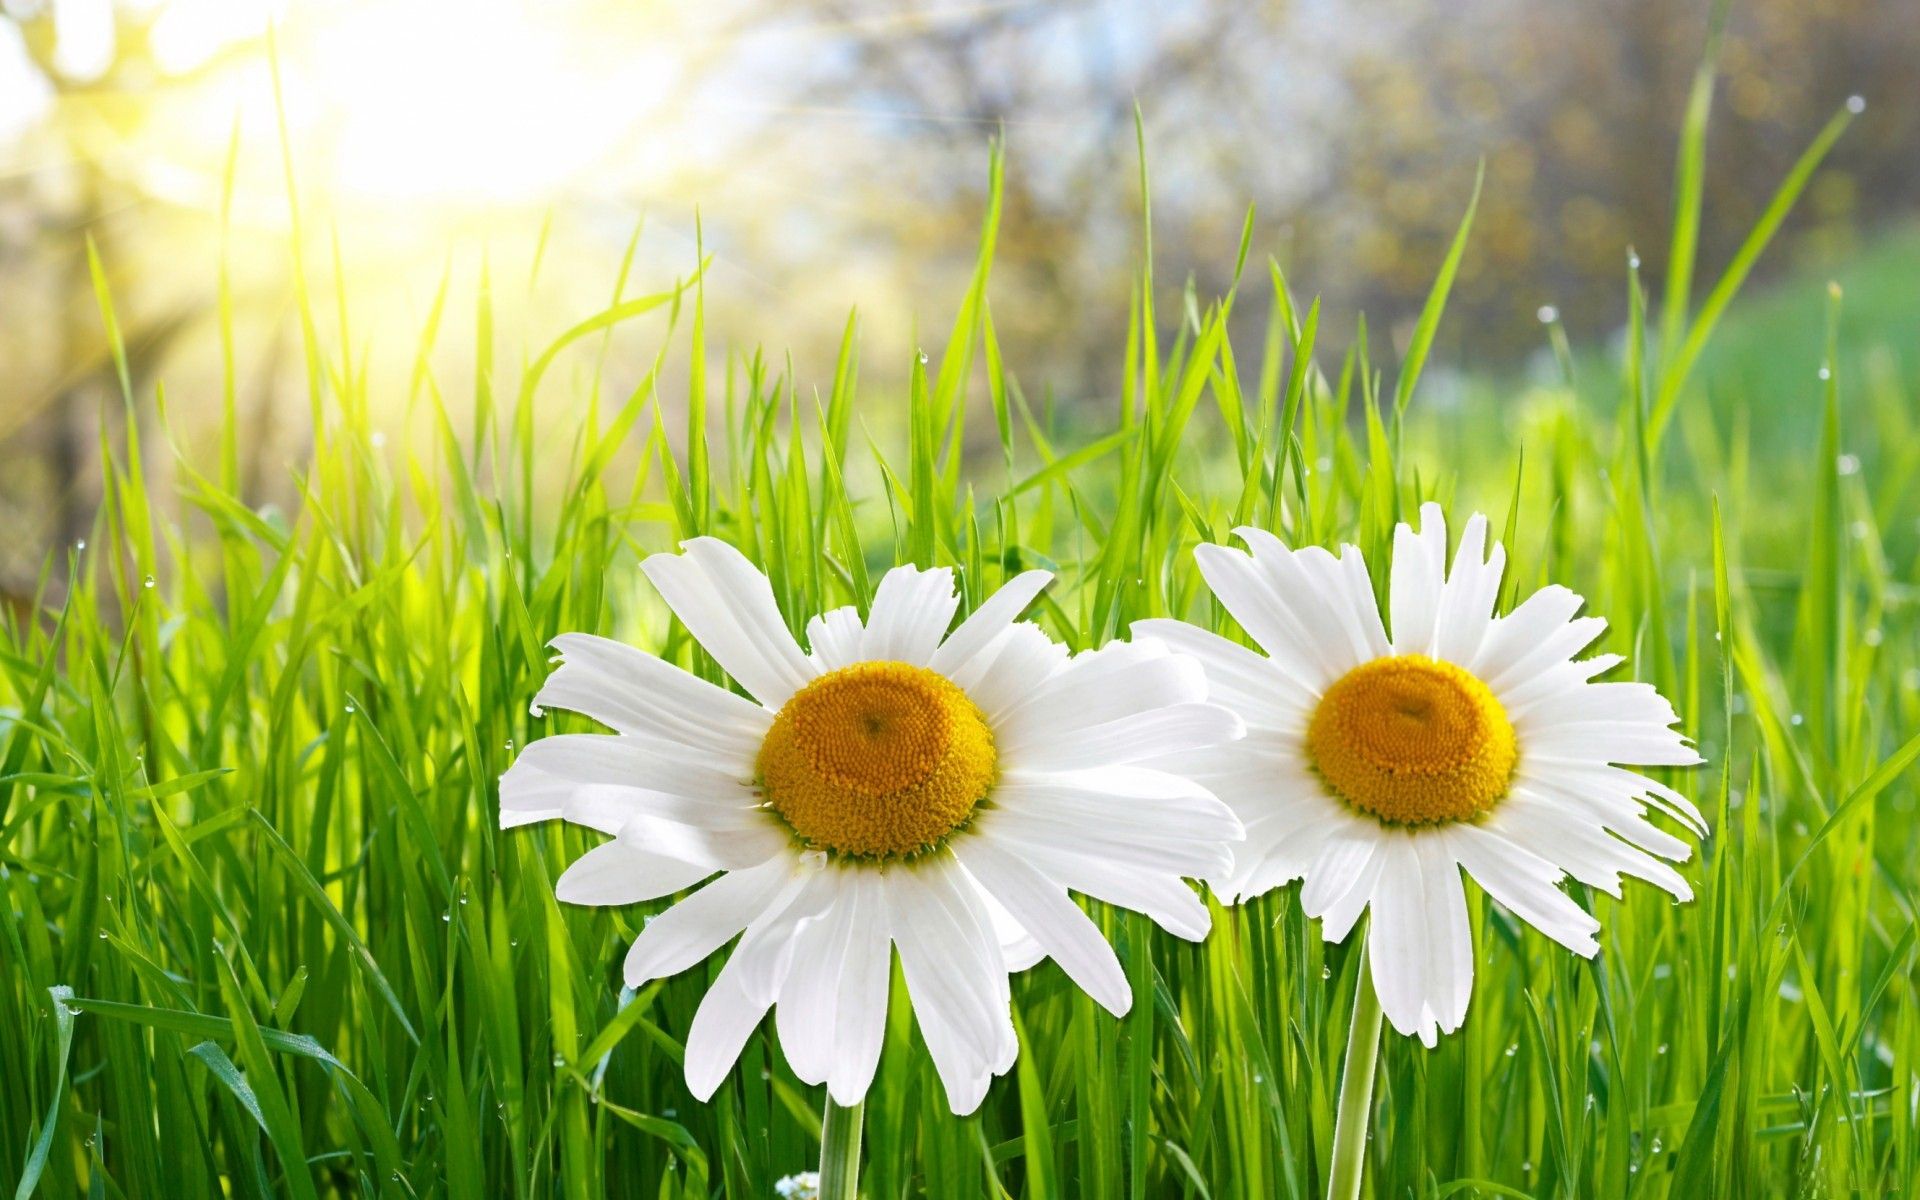 Tratinčice proljetno cvijece | Desktop pozadina proljeće | Les ...